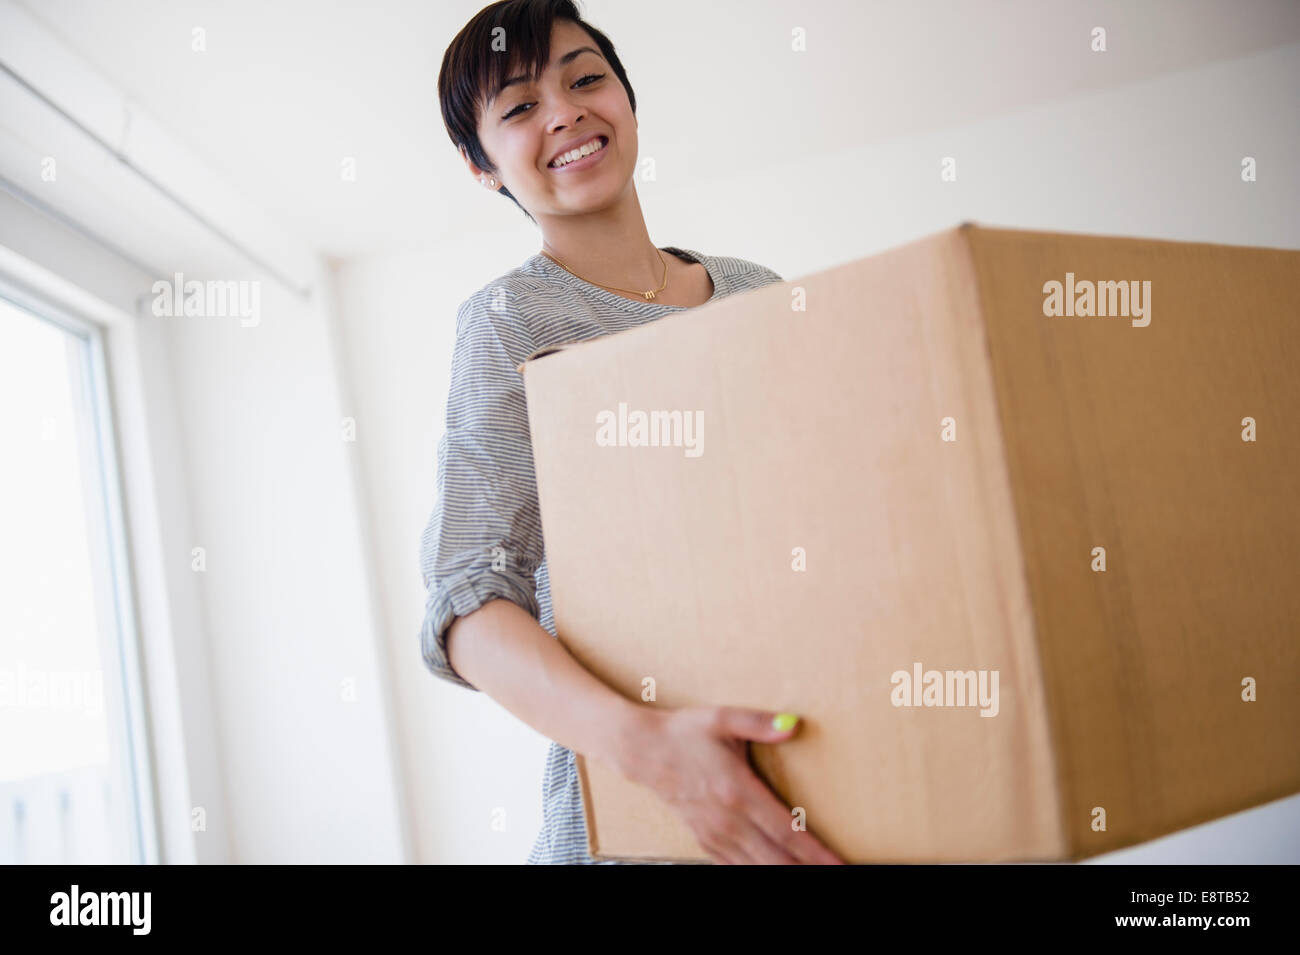 Smiling mixed race woman carrying cardboard box Stock Photo